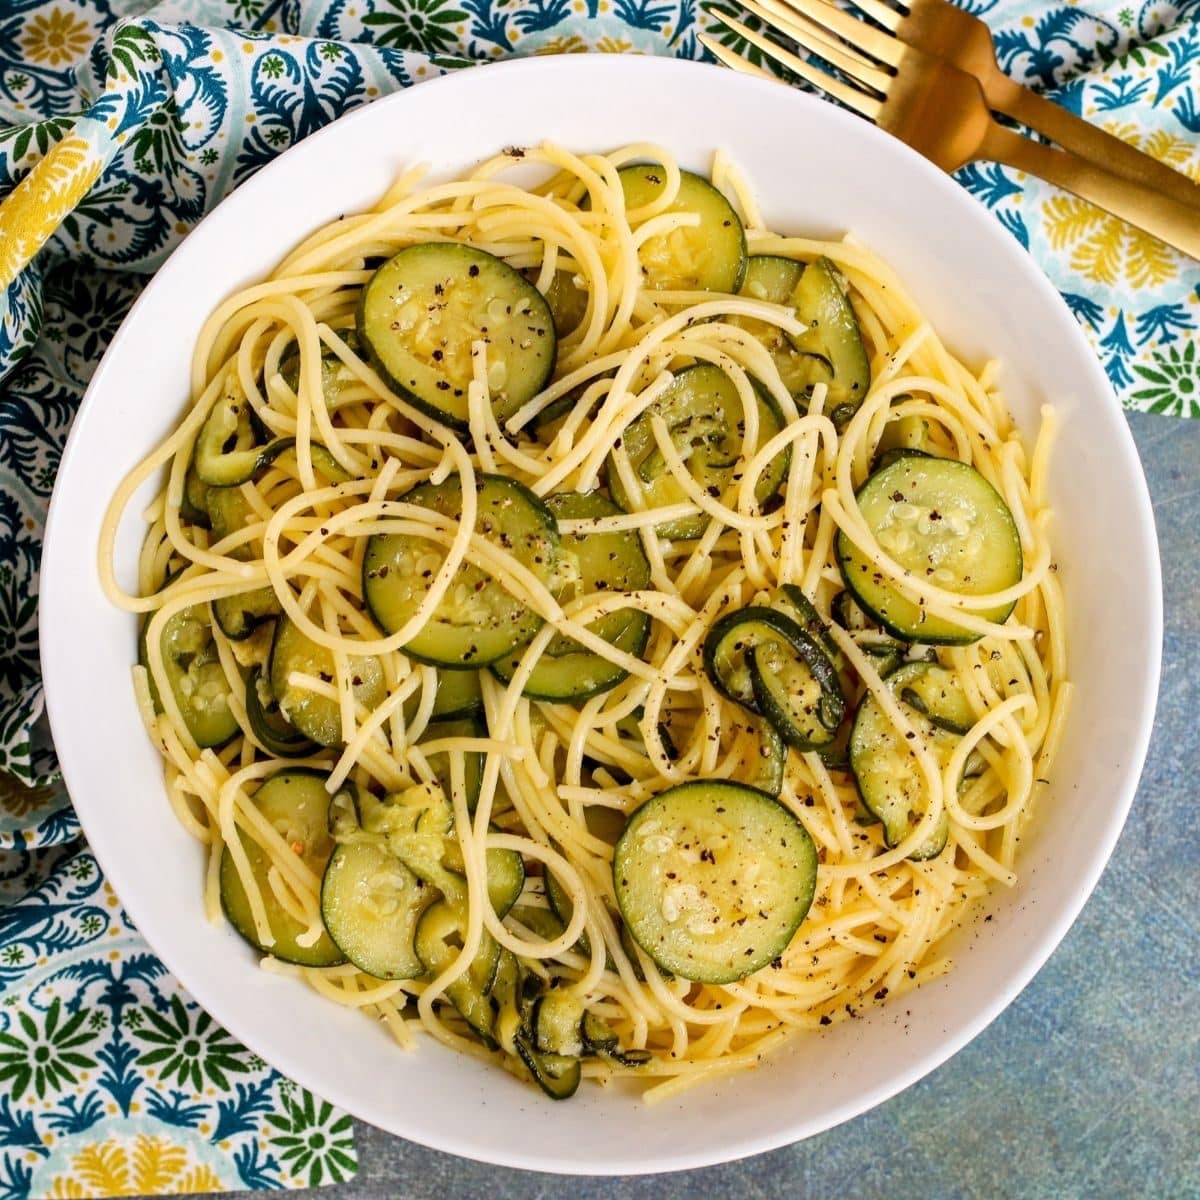 Bowl of spaghetti with zucchini